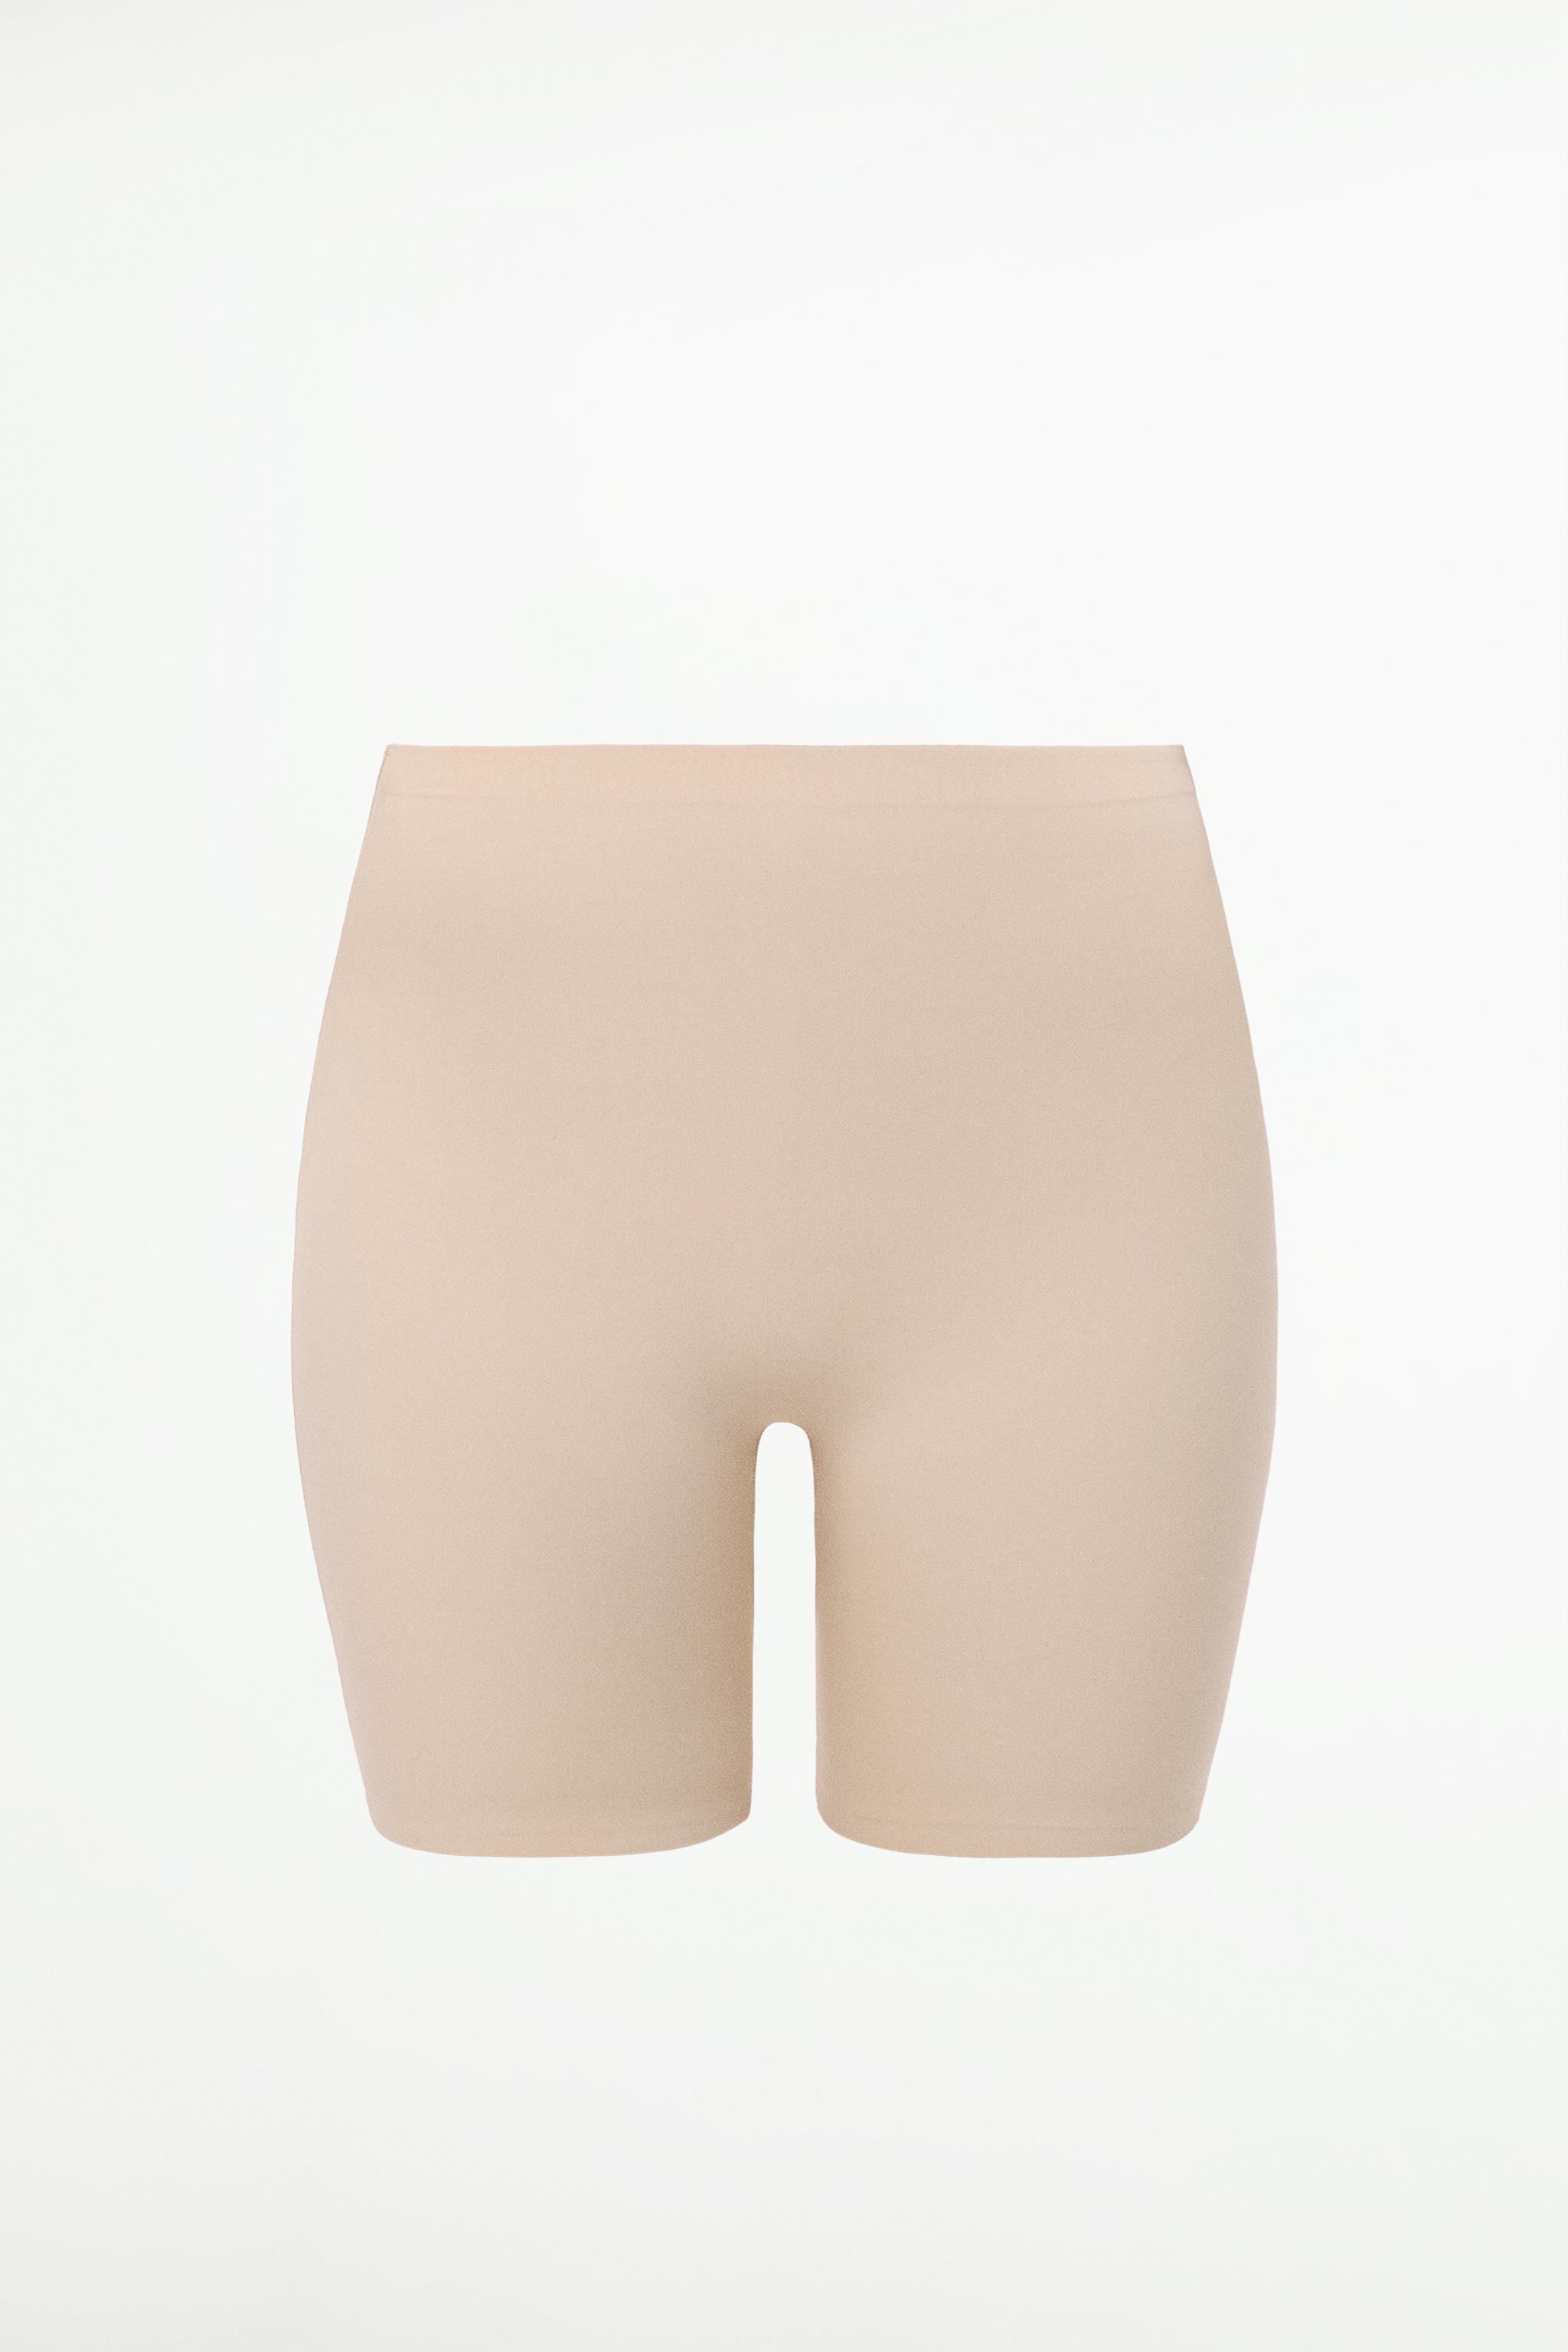 Comfia Shapewear Shorts (Small, Beige)